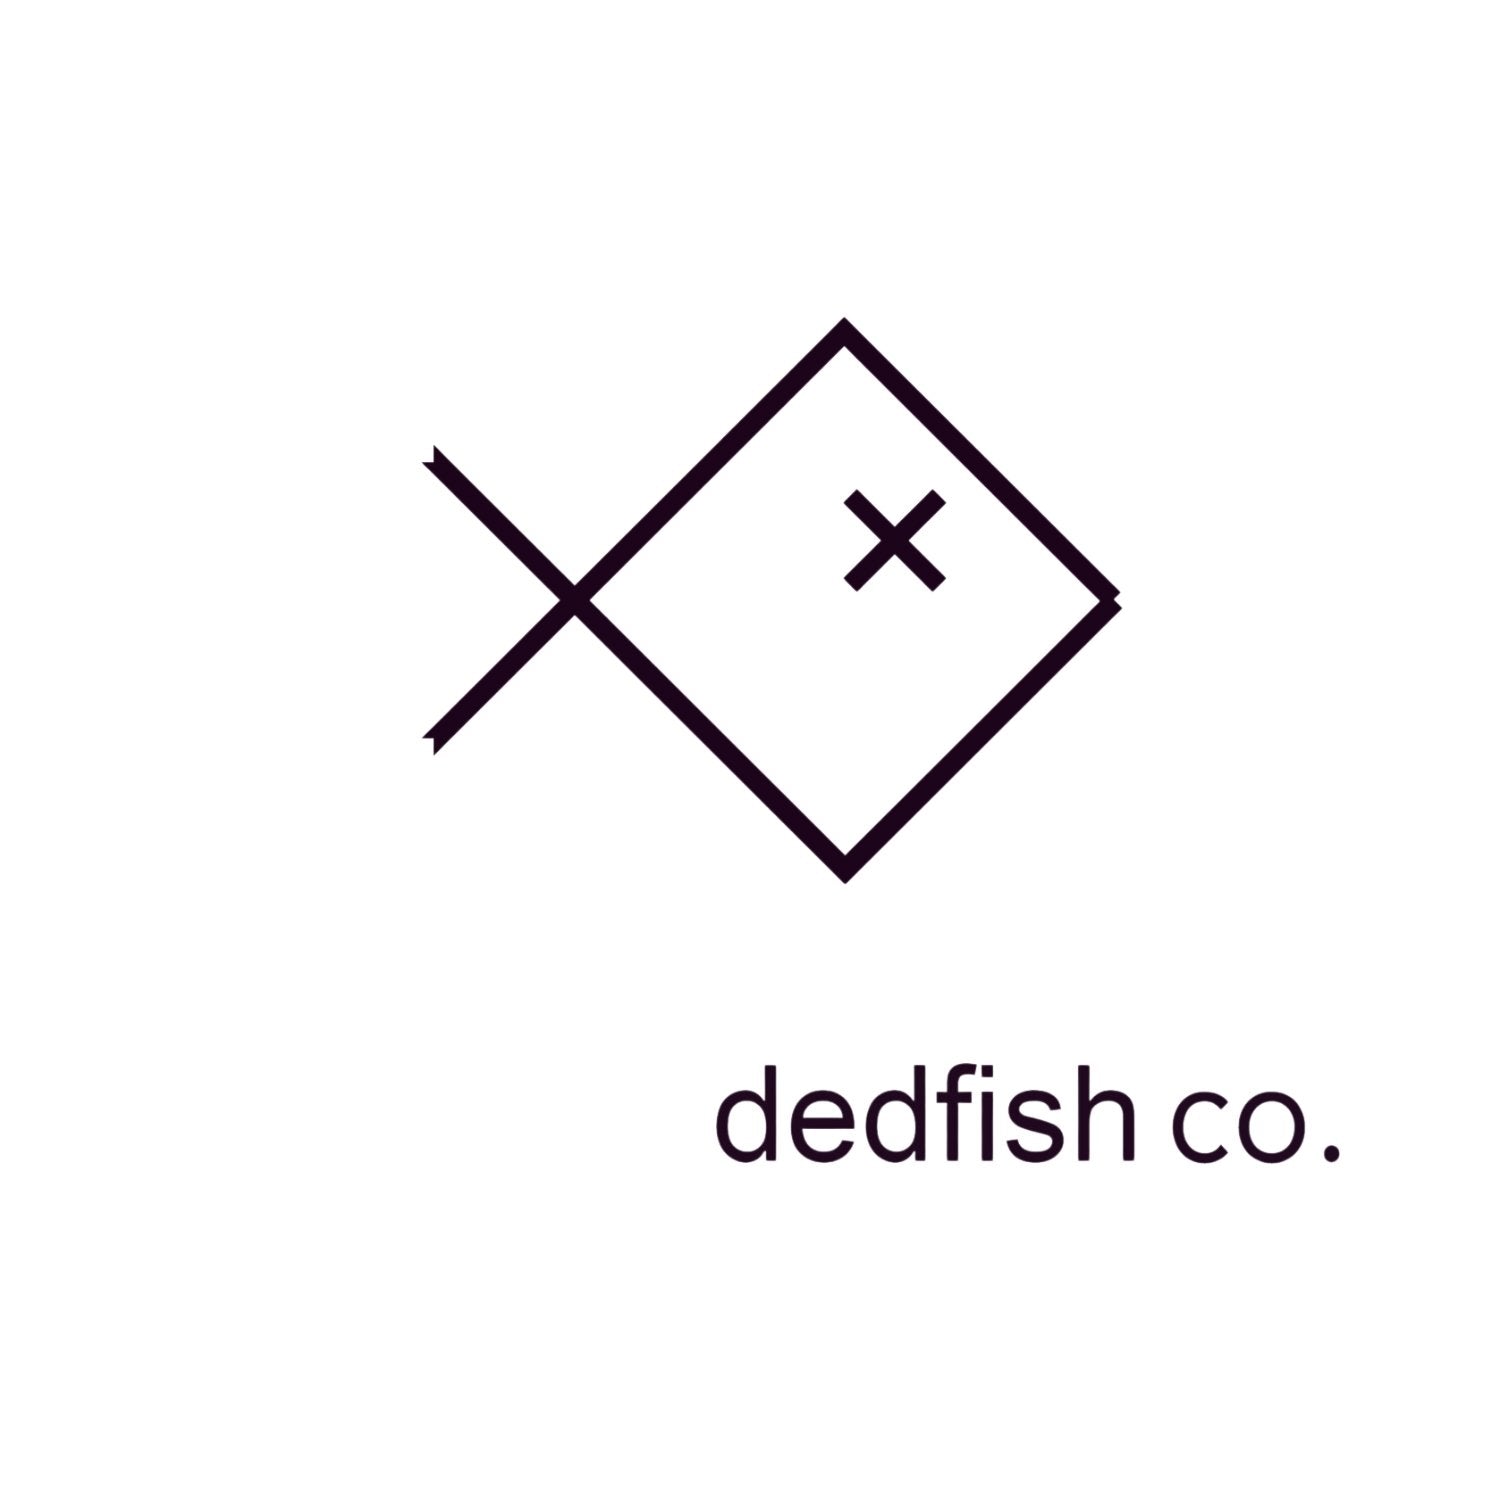 Dedfish Co. – dedfish co